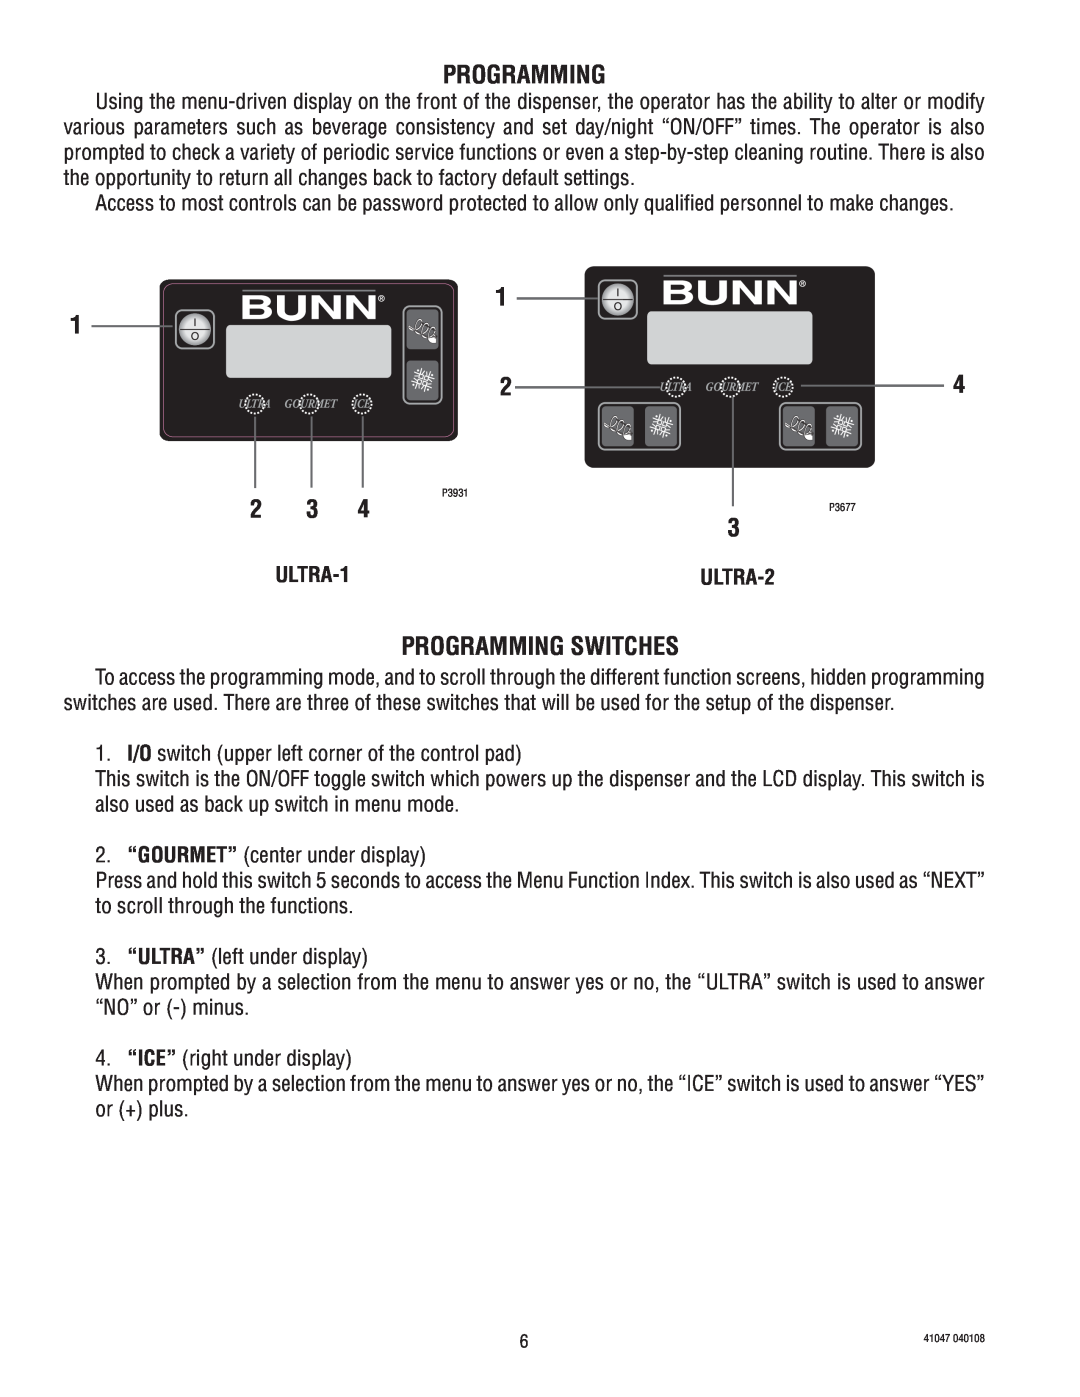 Bunn ULTRA-1 manual Programming Switches, ULTRA-2 